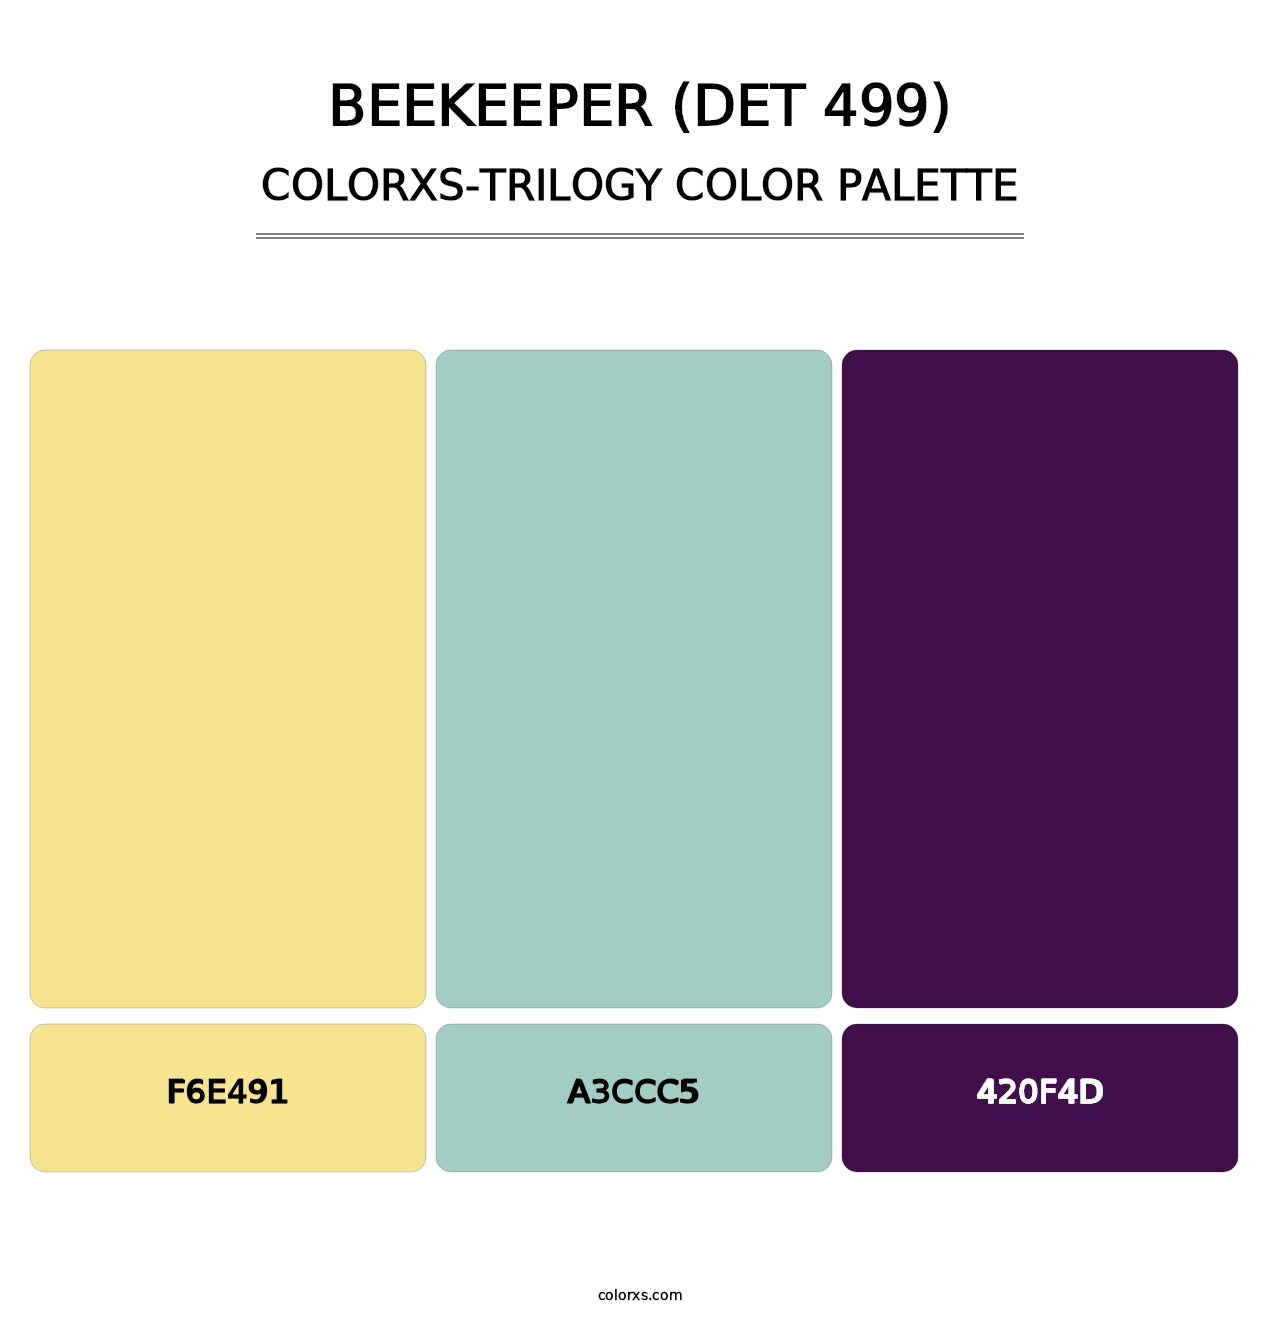 Beekeeper (DET 499) - Colorxs Trilogy Palette